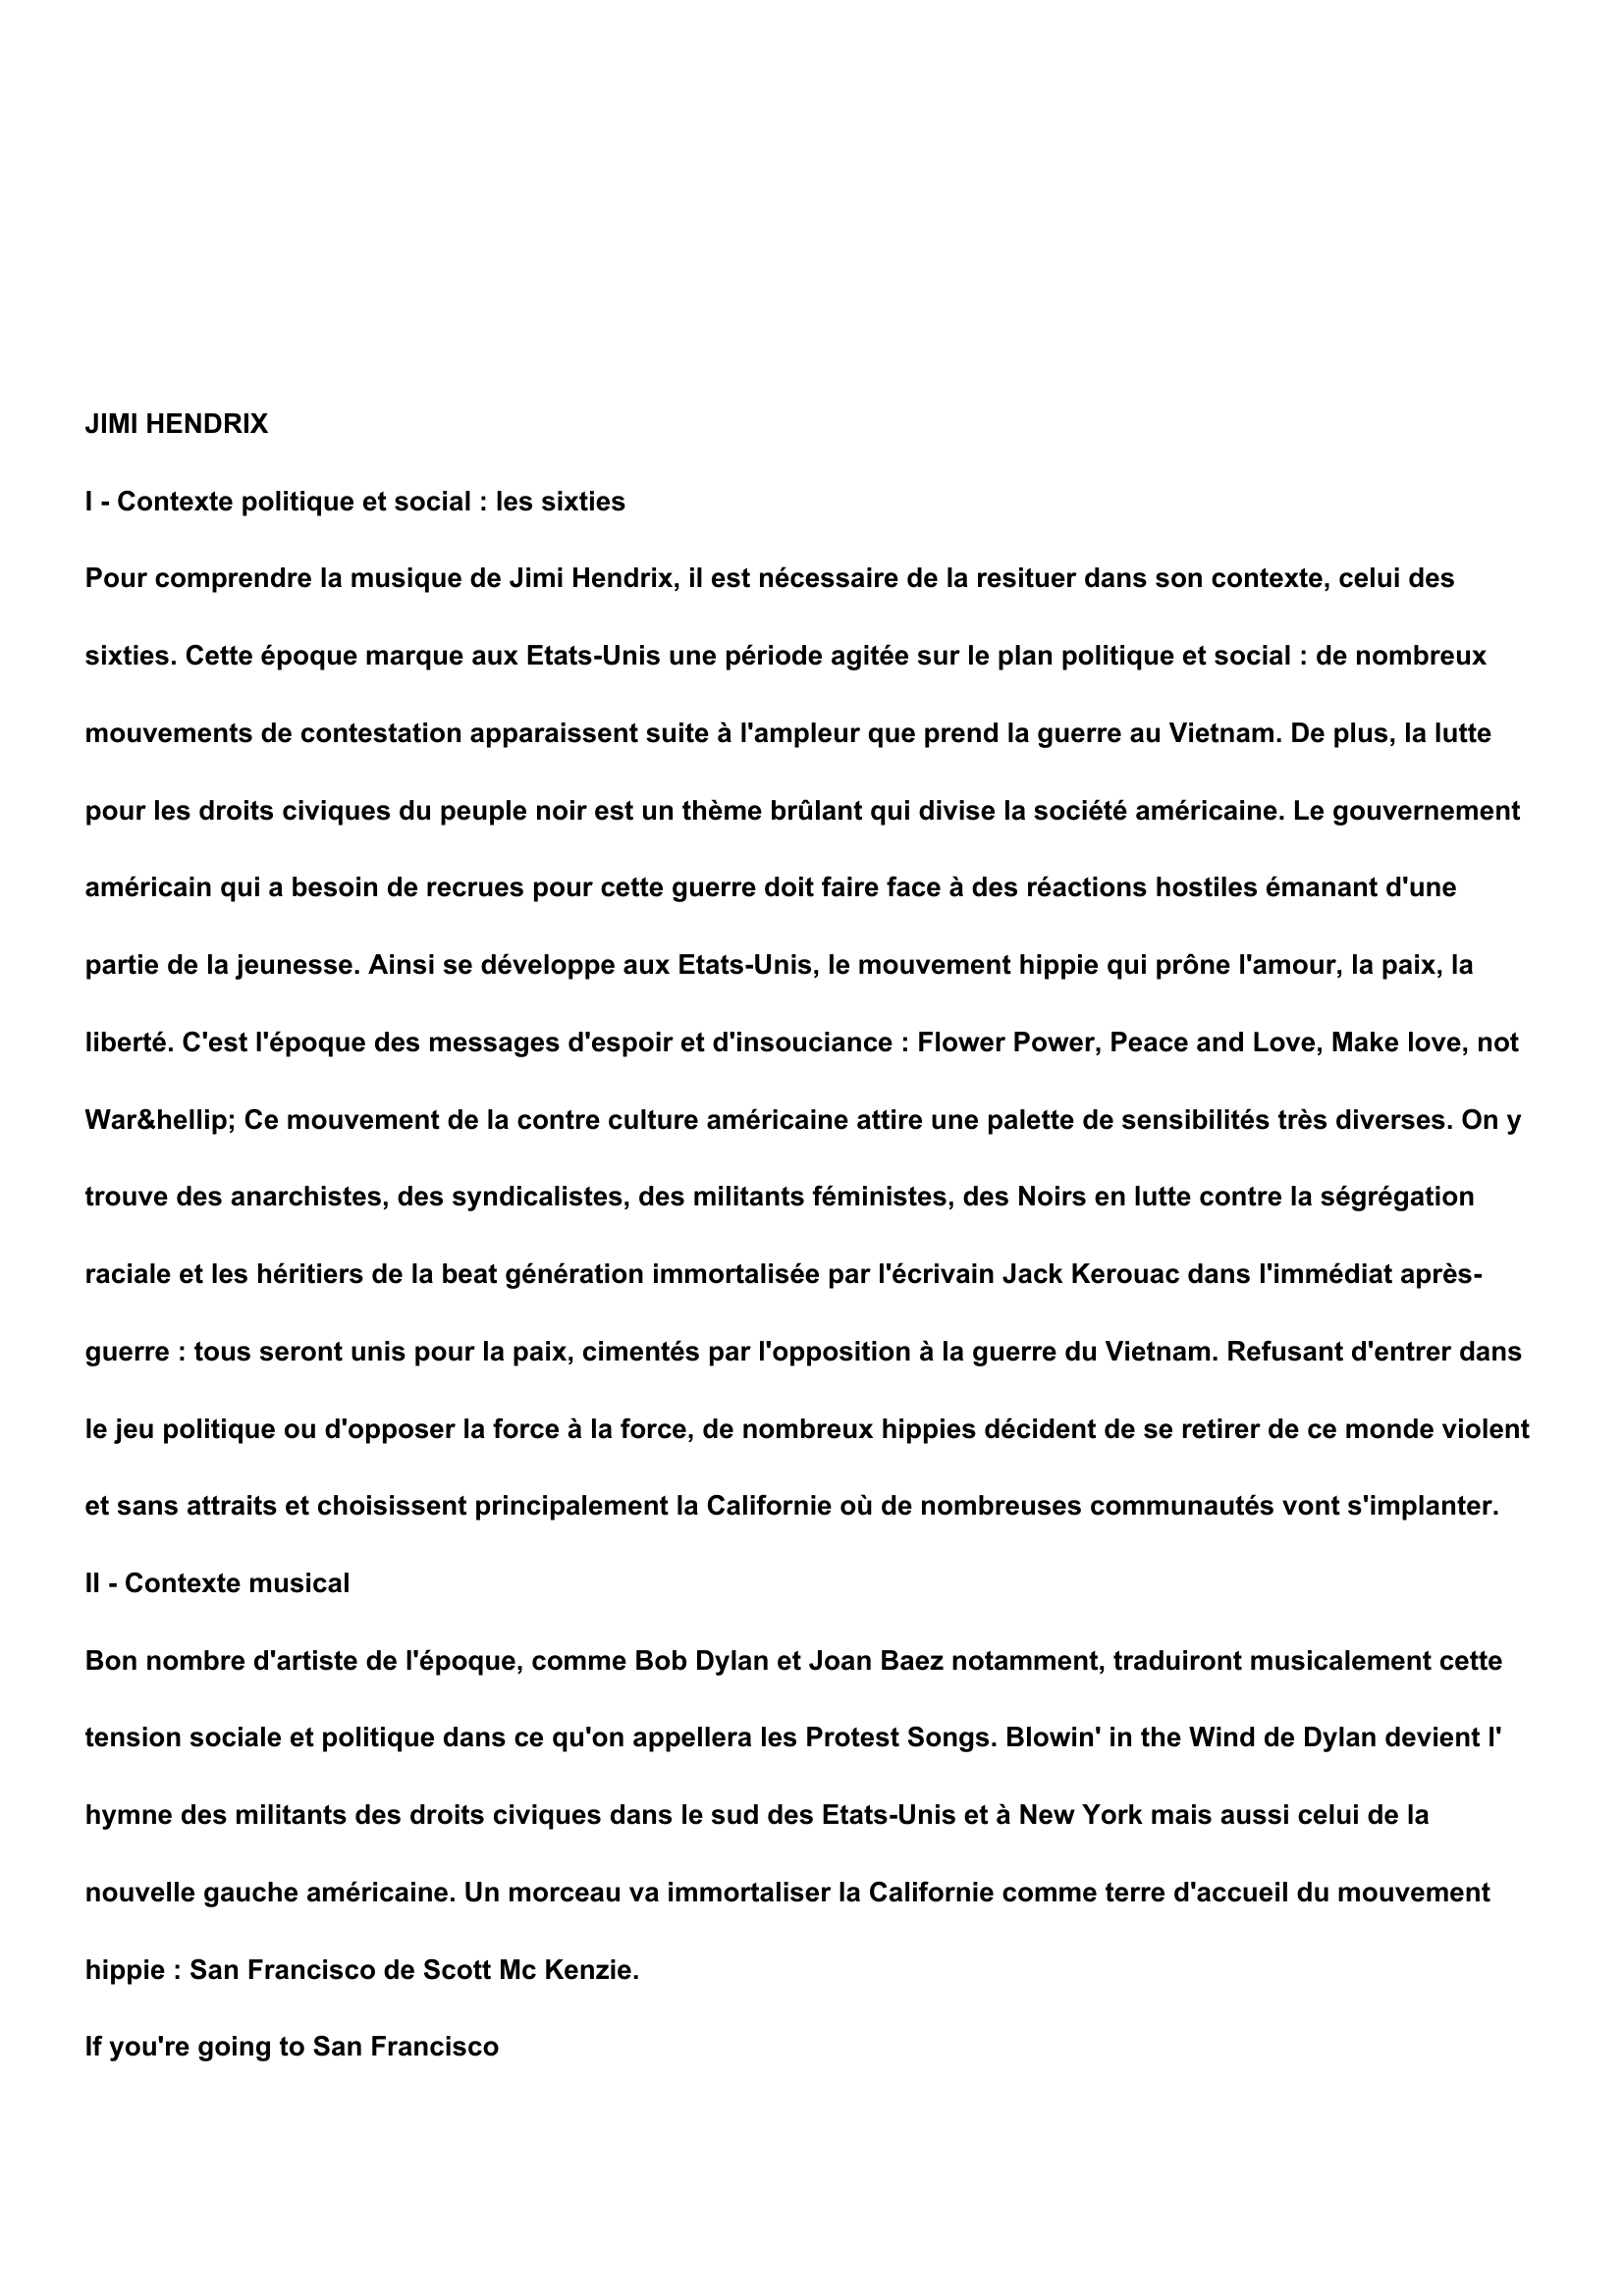 Prévisualisation du document Hendrix (James Marshall, dit Jimi)